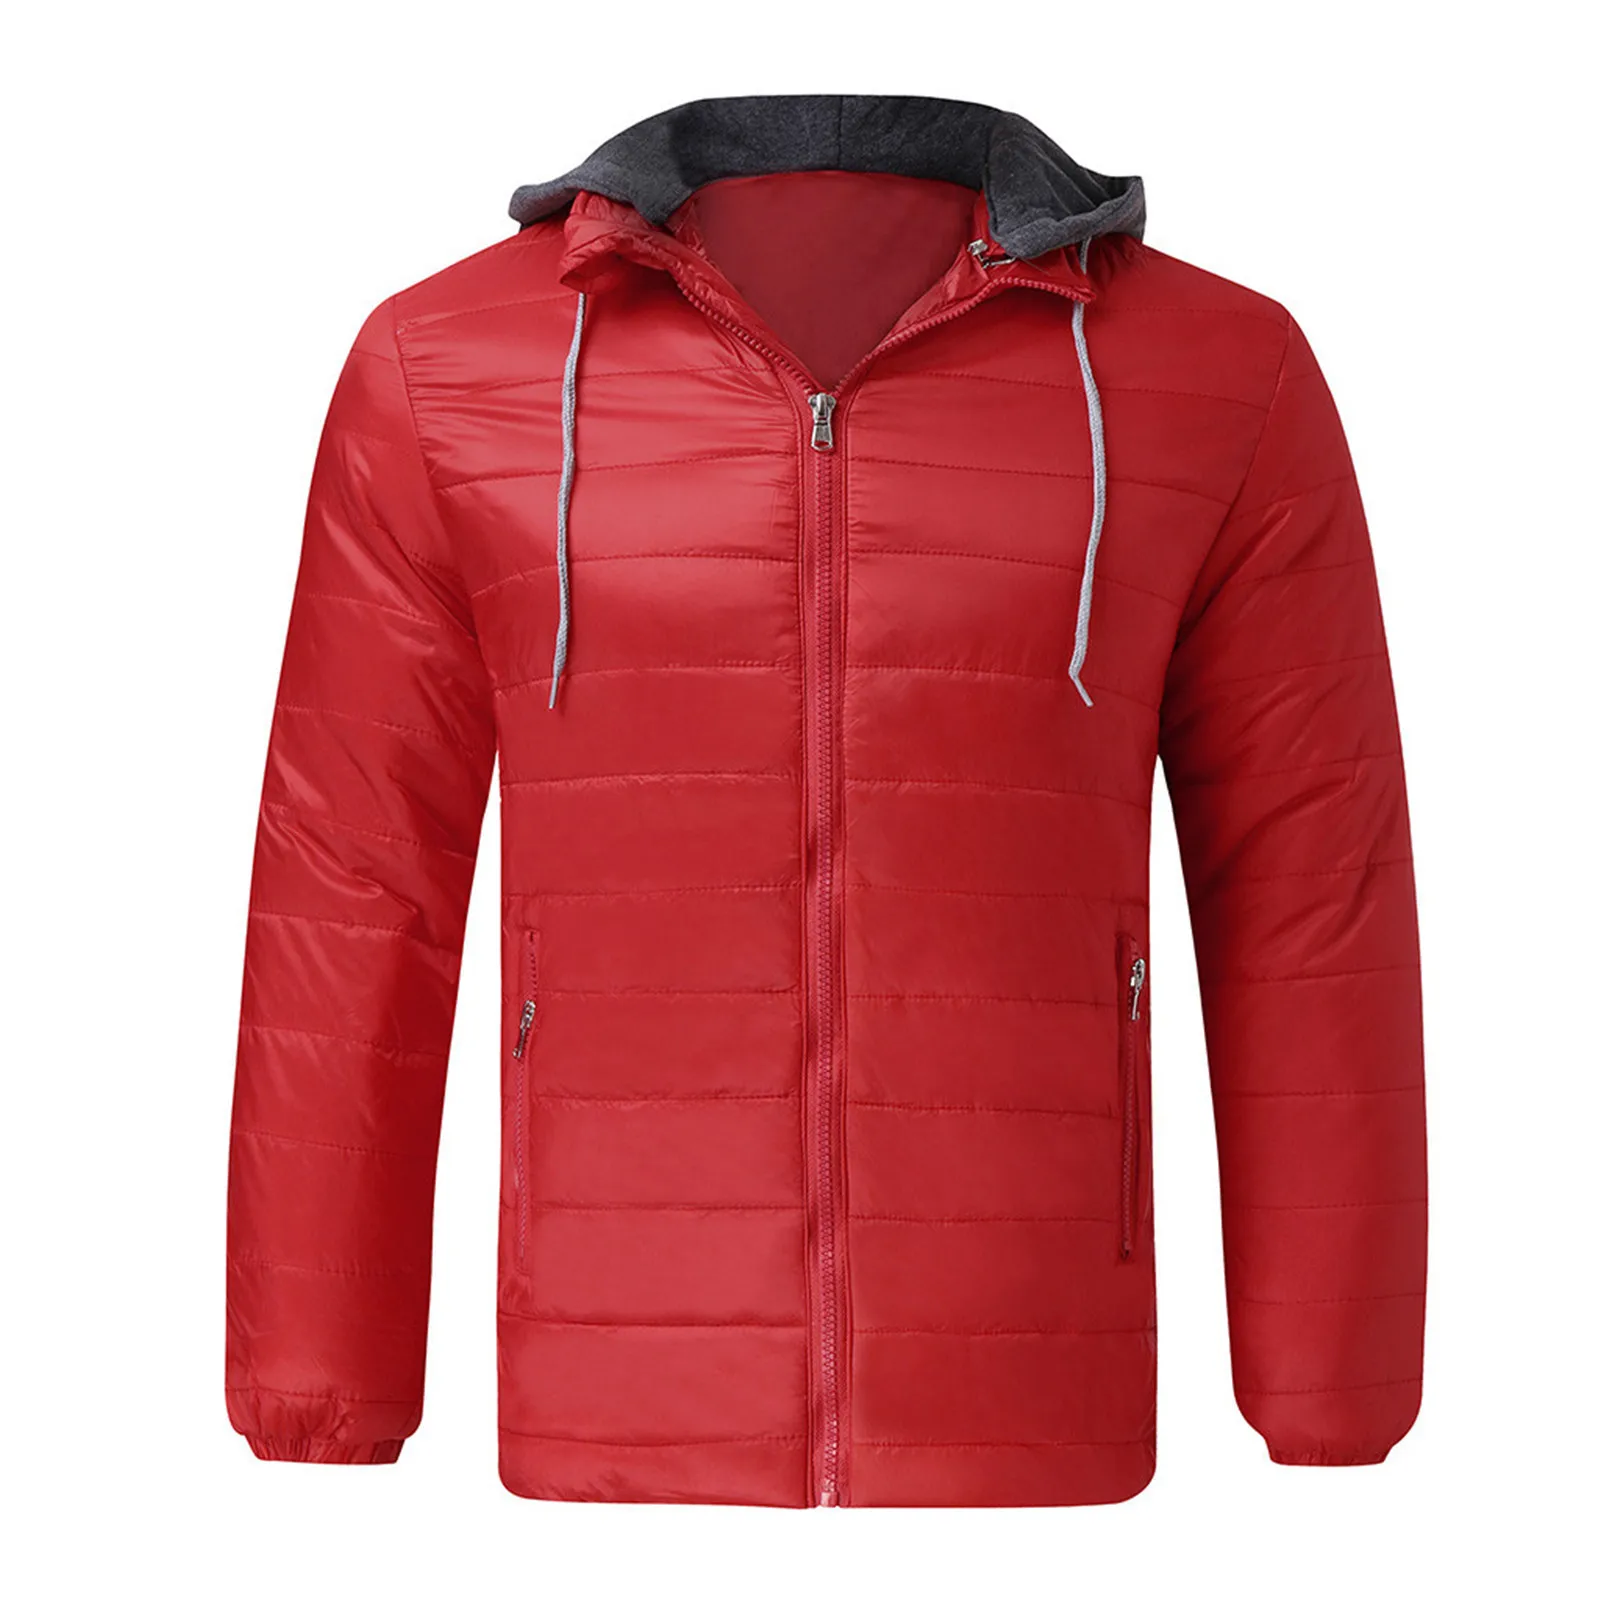 Warm Jackets Men’s Winter Zipper Warm Down Jacket Windbreaker Packable Light Top Quality Parkas Coat Casual Hoodie Overcoats #4